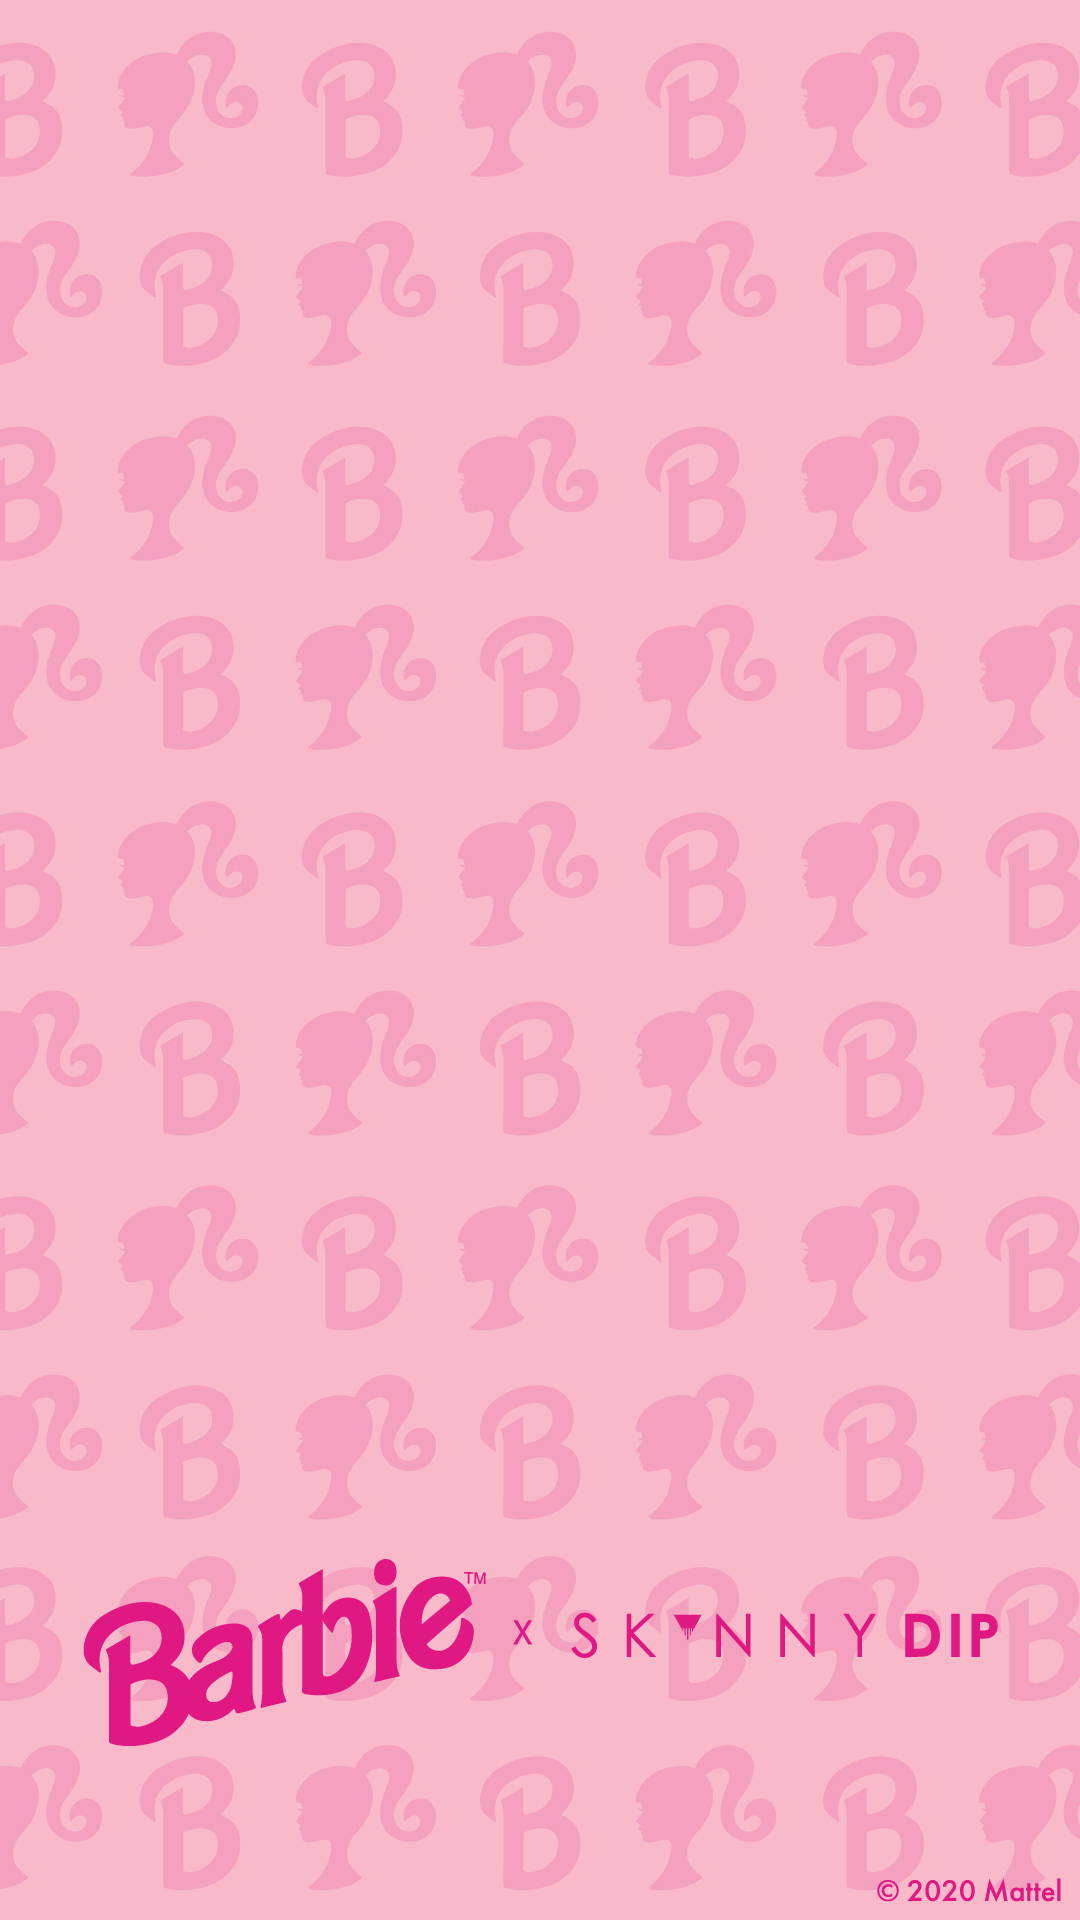 Barbie x Skinnydip: Phone Wallpapers